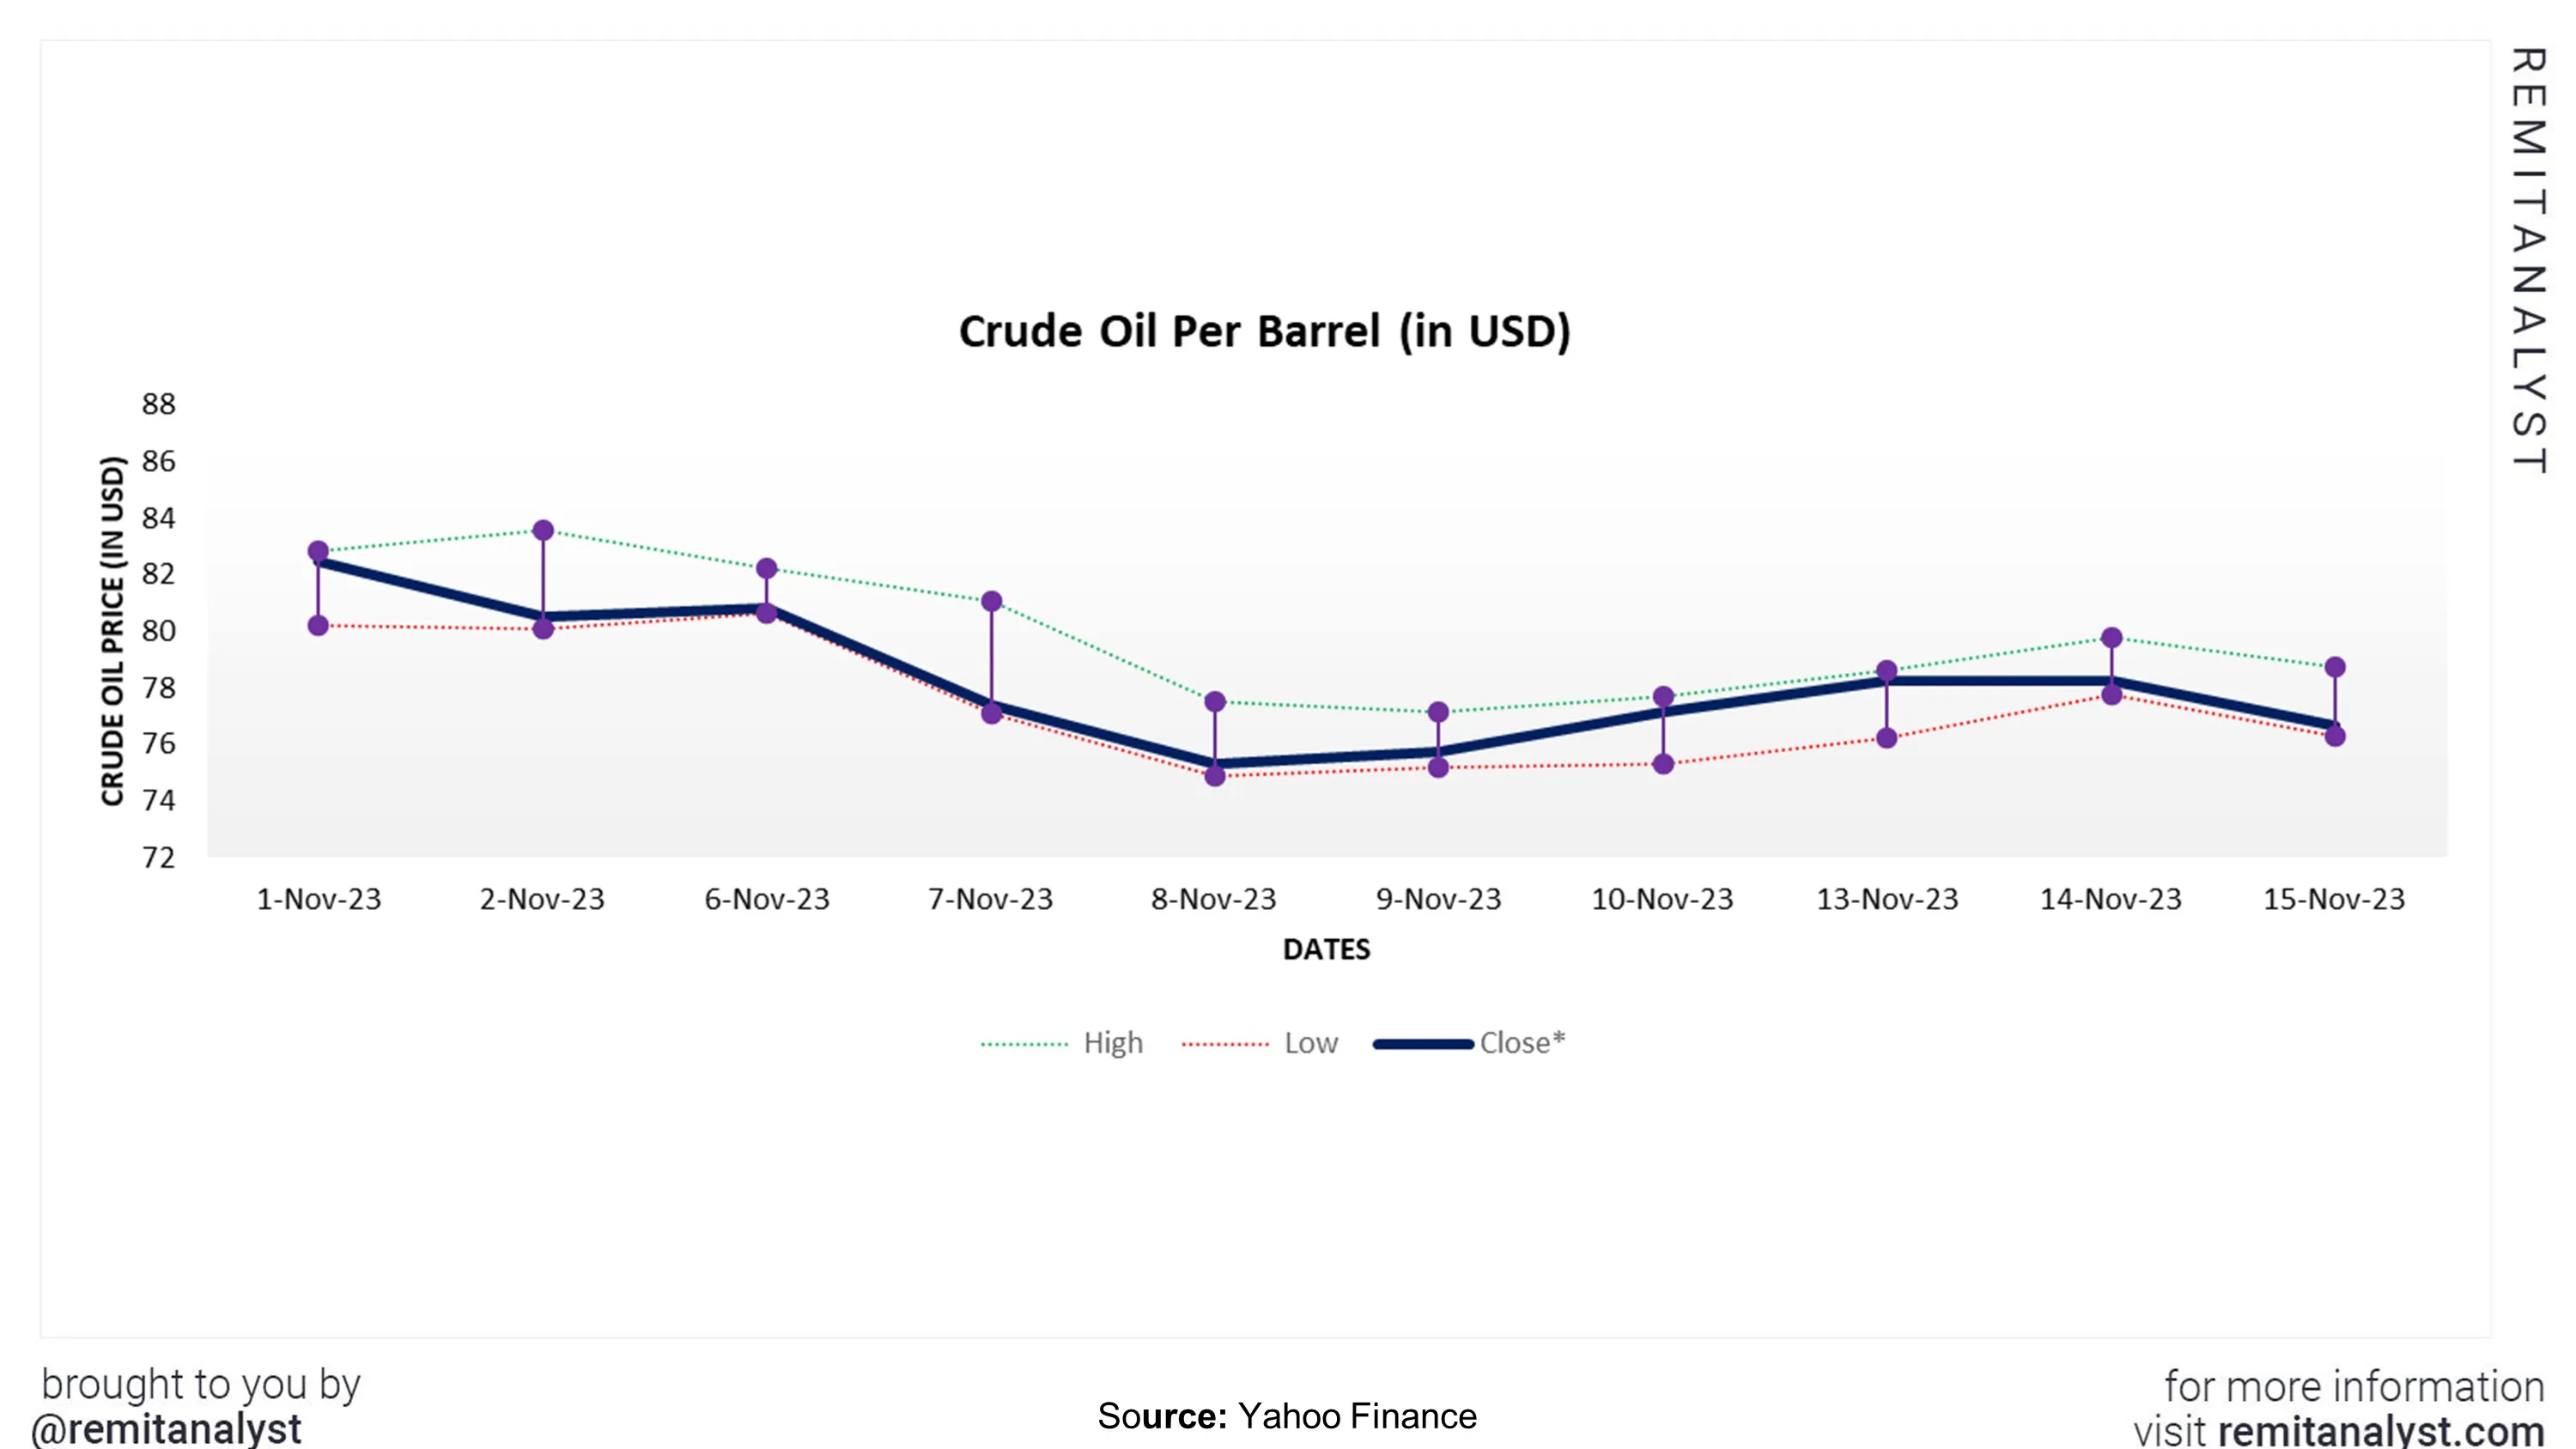 crude-oil-prices-from-1-nov-2023-to-15-nov-2023